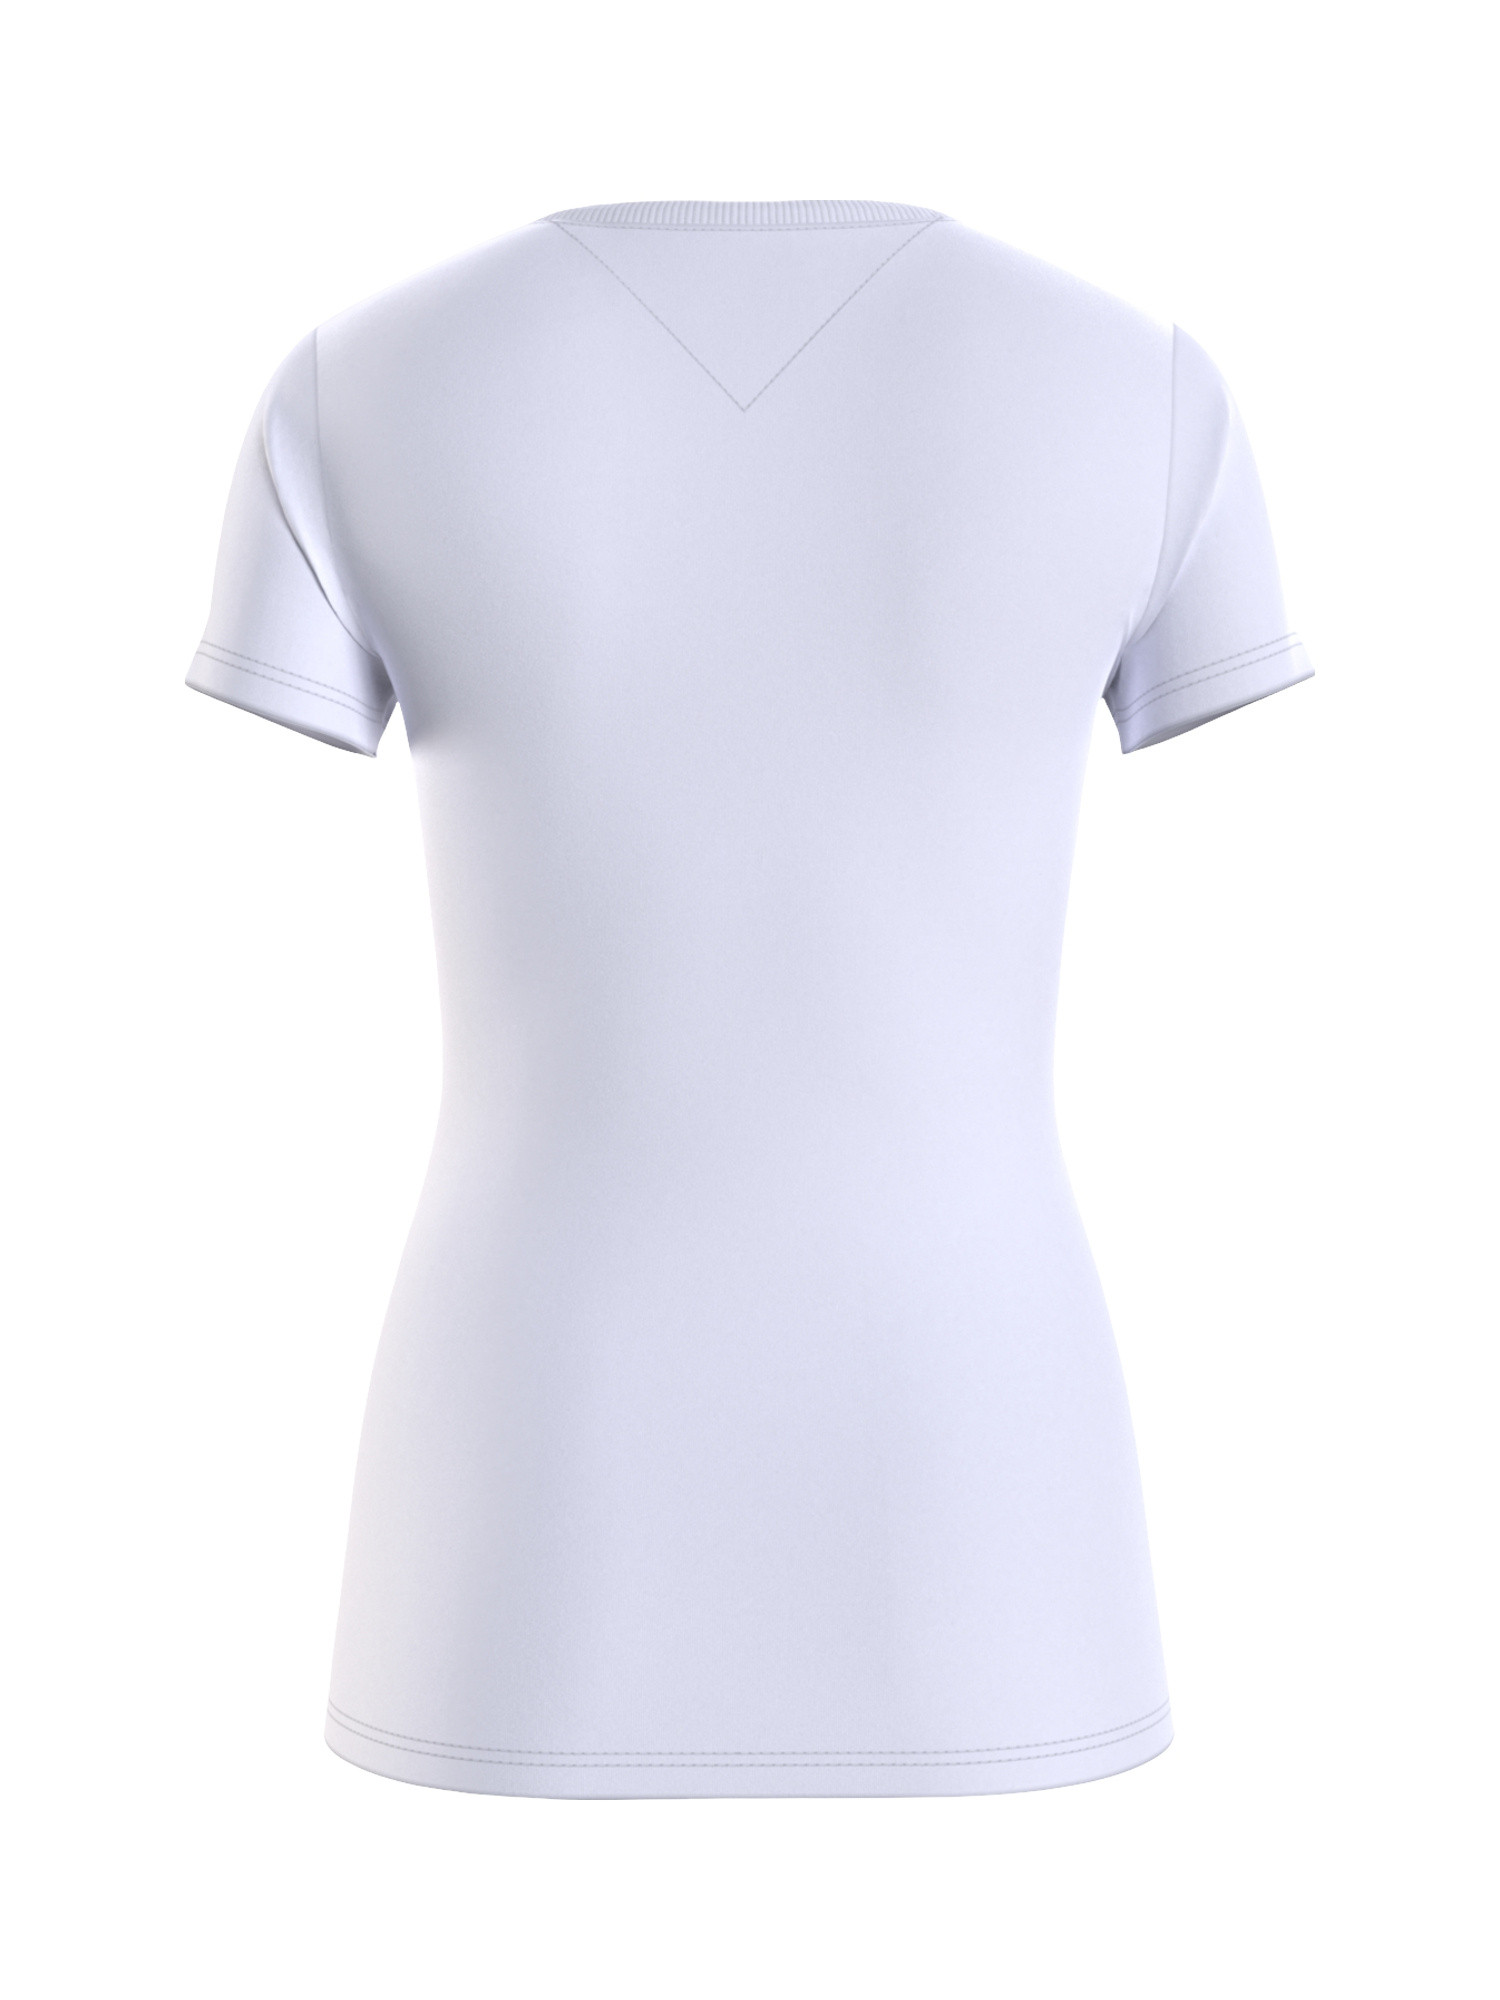 T-shirt aderente con logo, Bianco, large image number 1